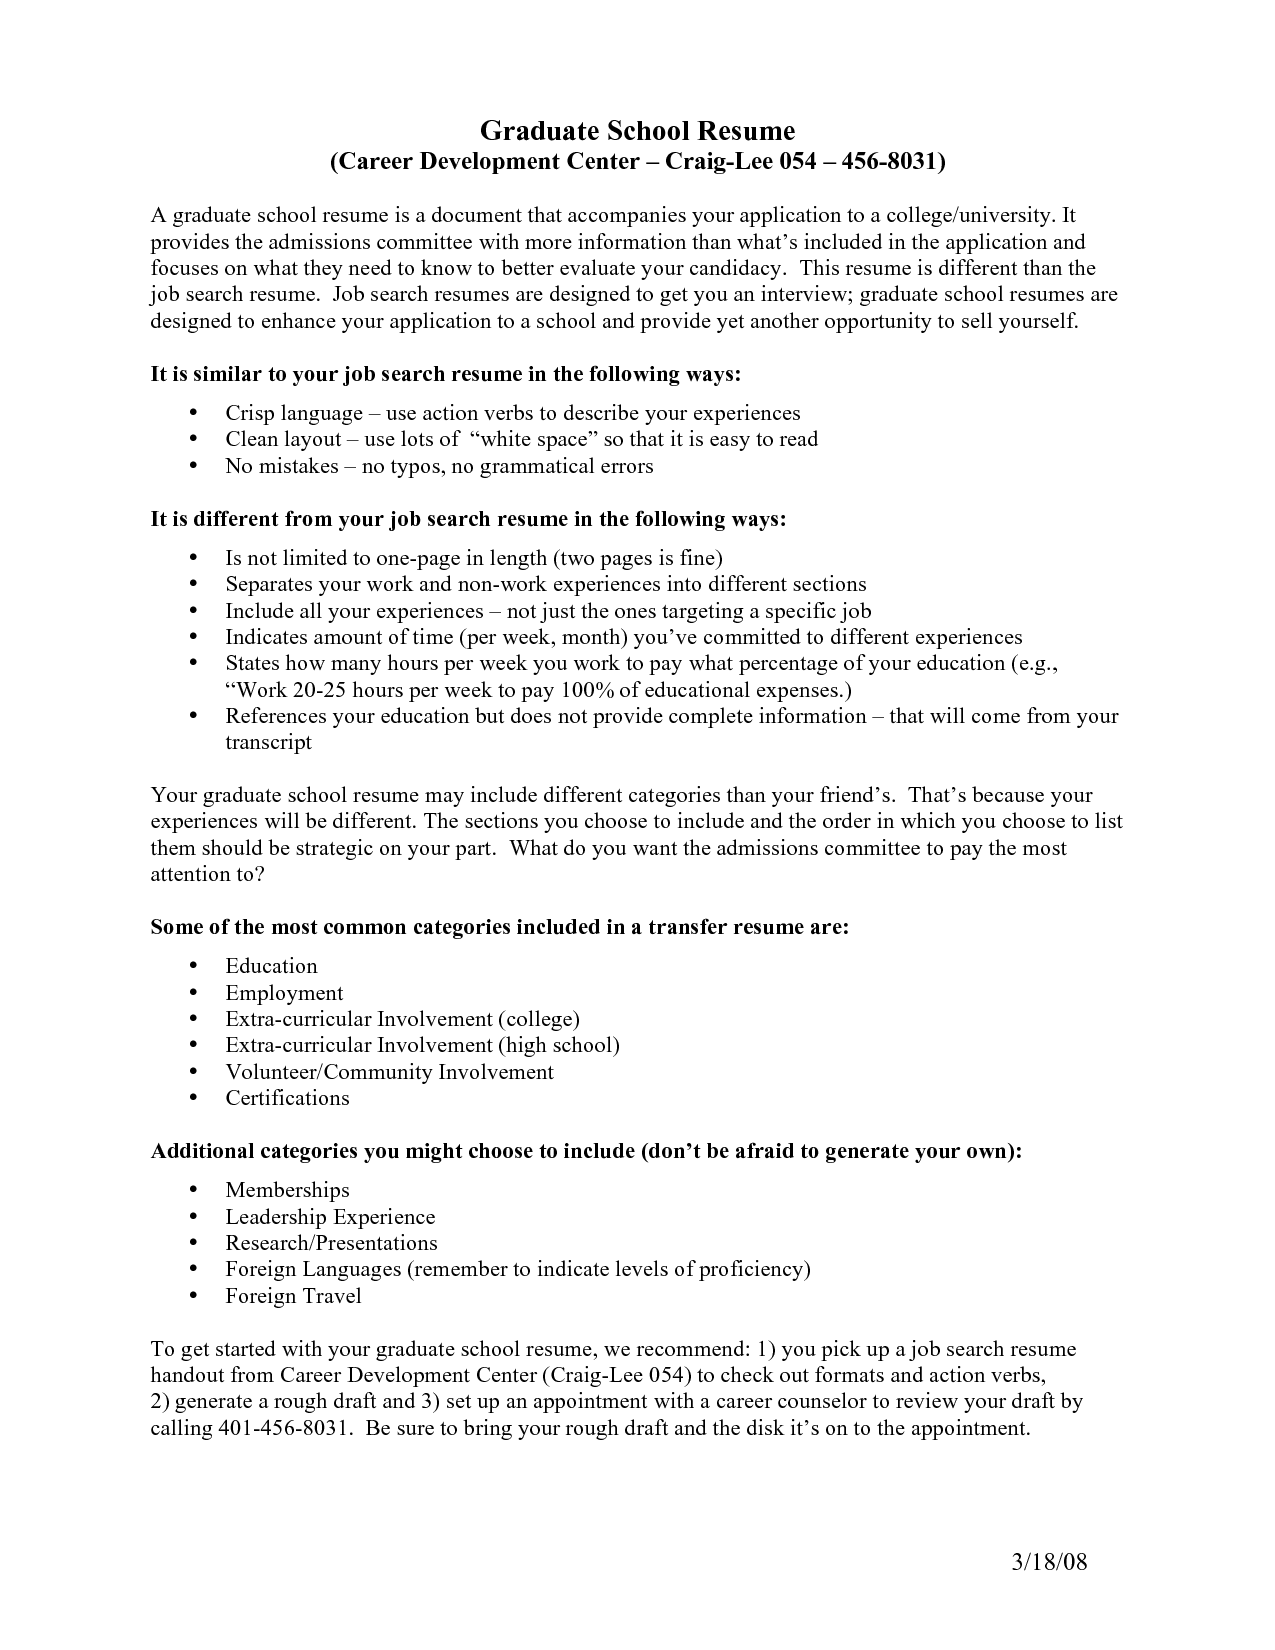 Resume For Graduate School Grad School Resume Sample How To Write A Resume For Graduate School Admission On How To Write A Resume For A Job resume for graduate school|wikiresume.com